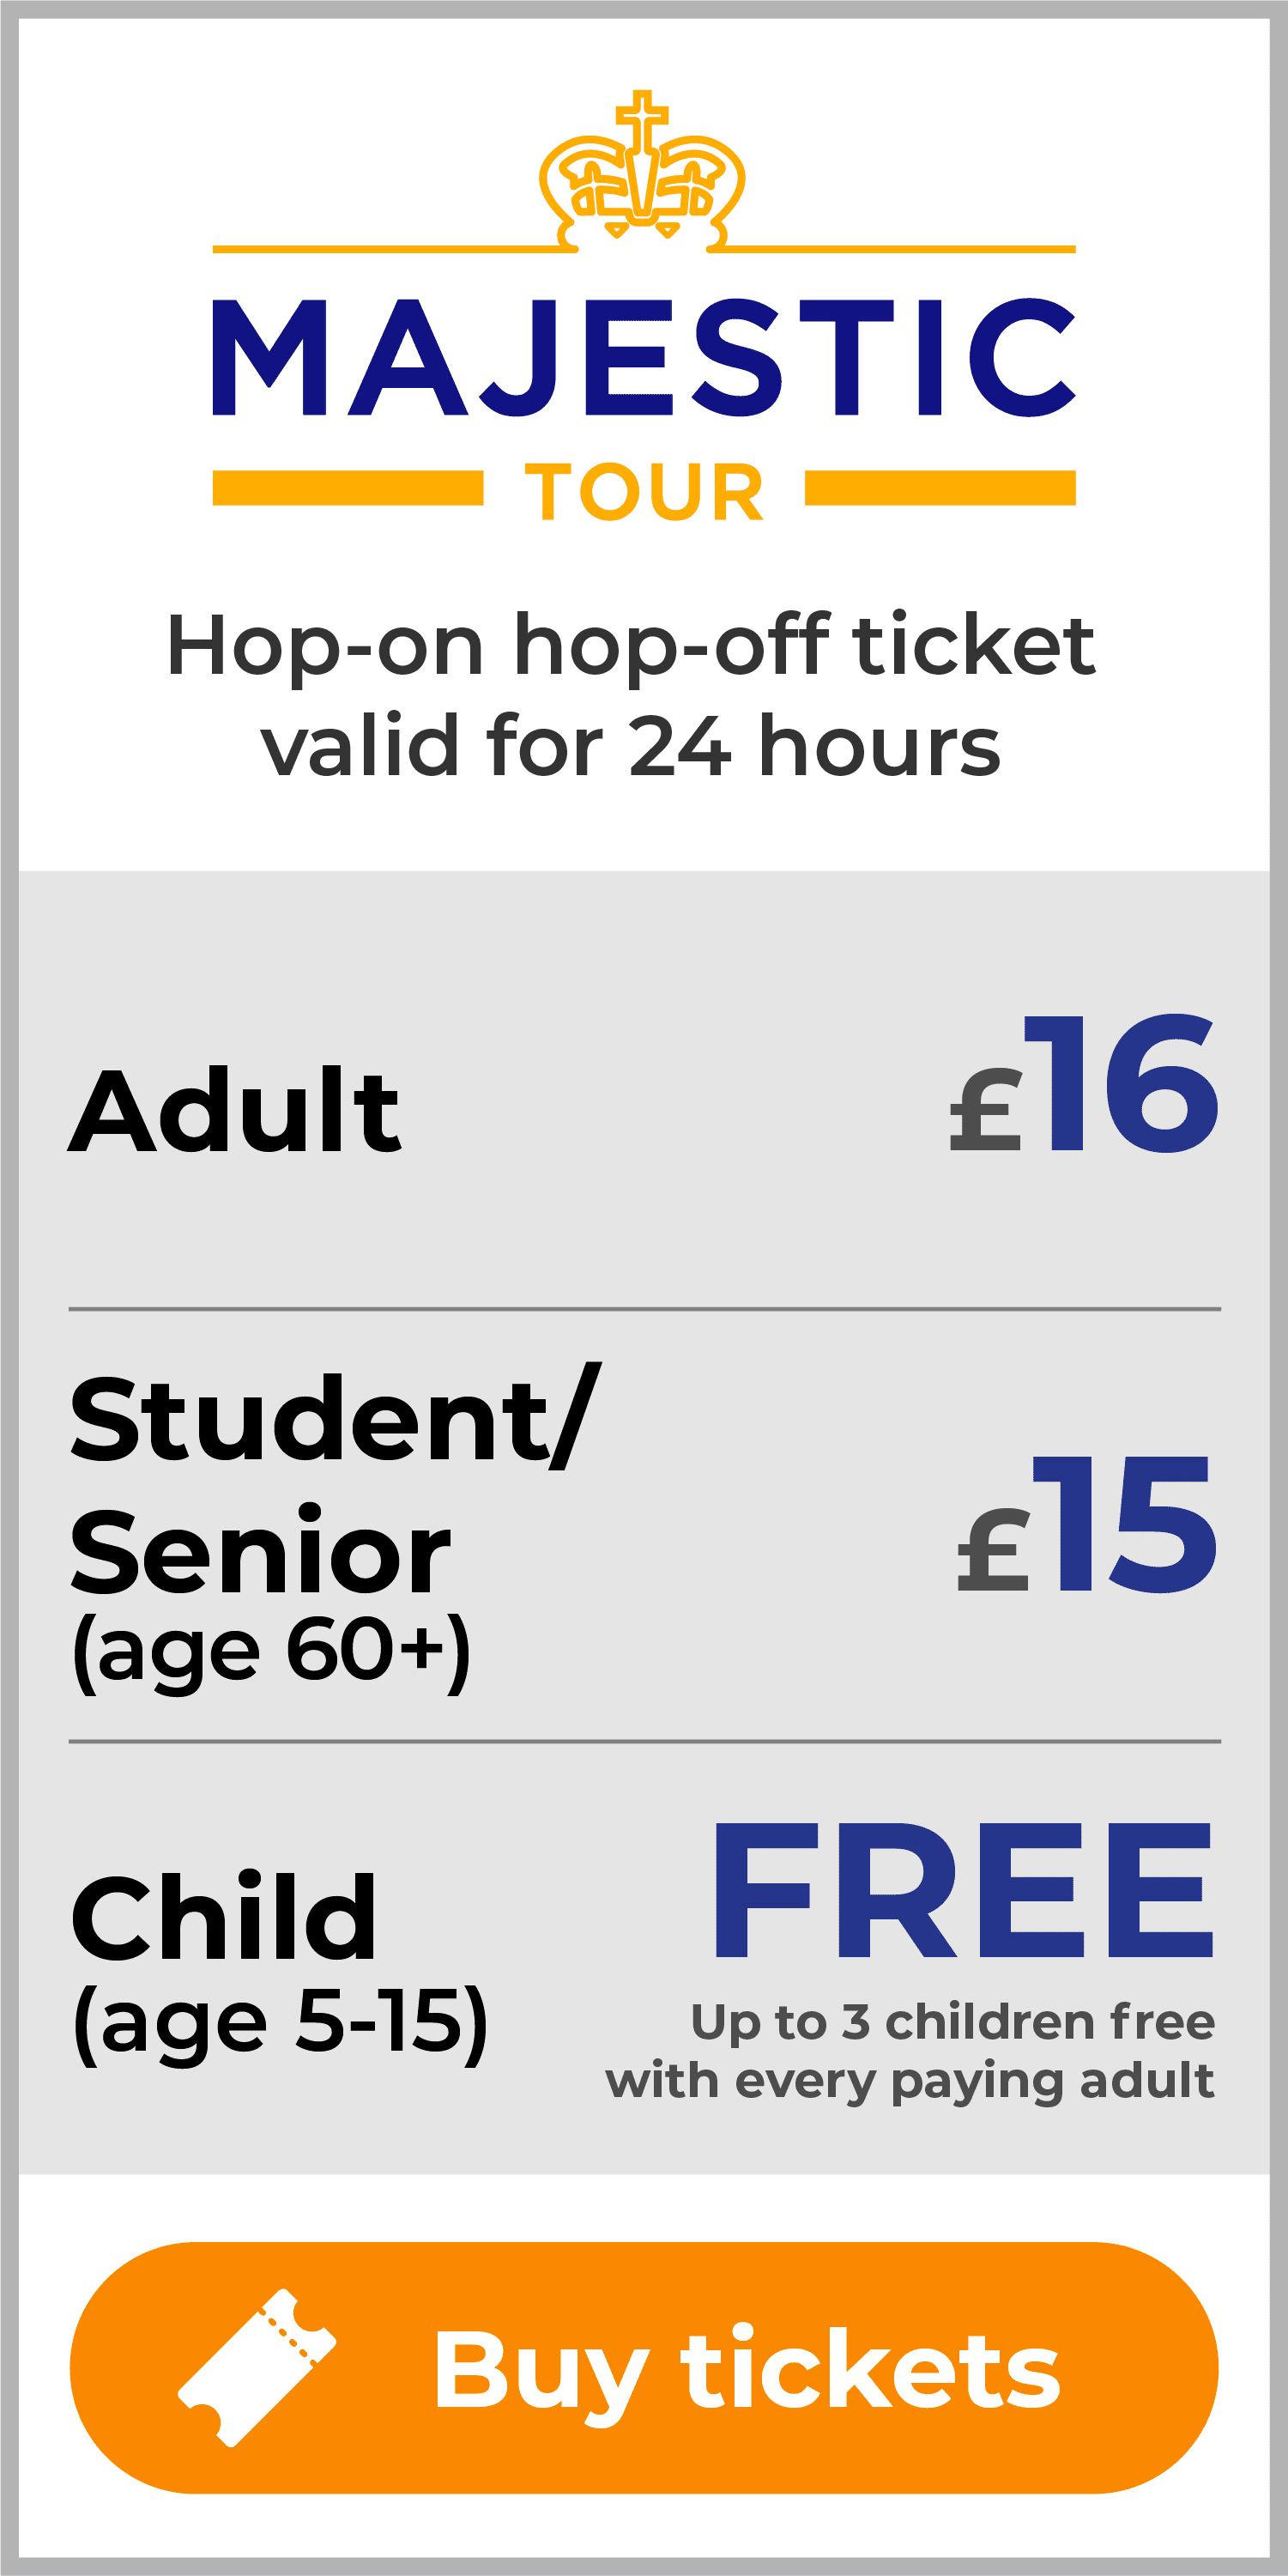 Majestic Tour Tickets £16 Adult £15 Senior child free